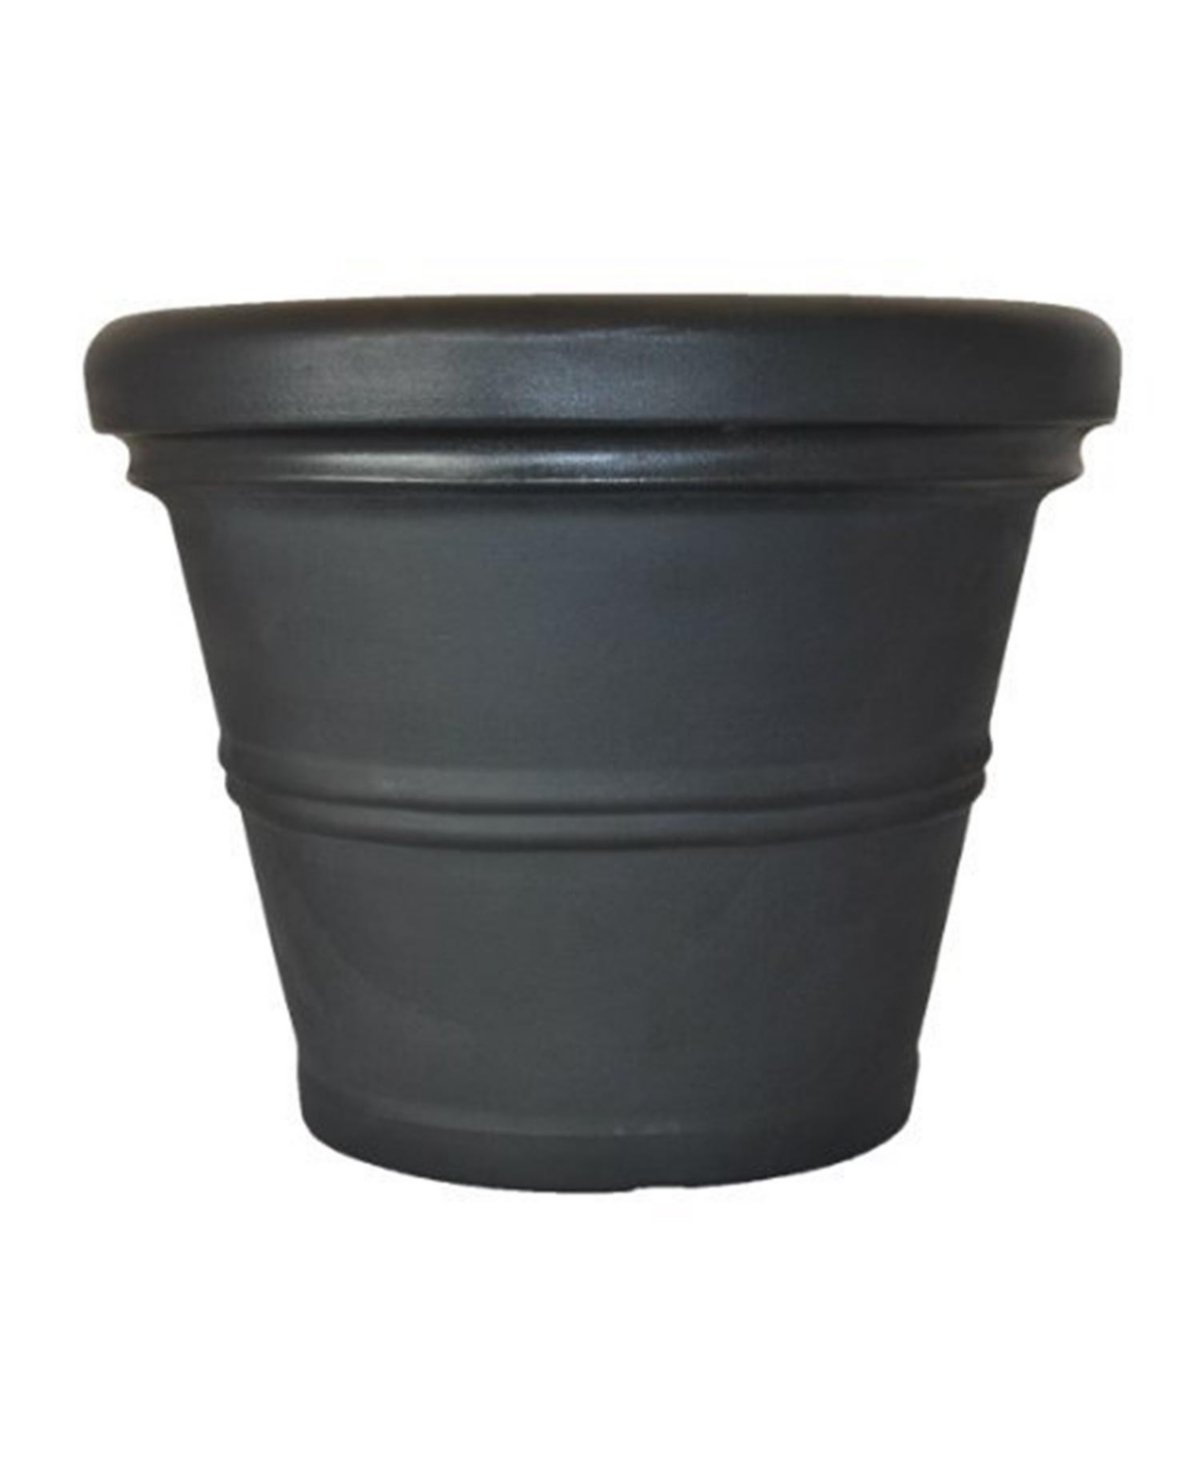 RR30BK Rolled Rim Garden Pot, 30-Inch, Black - Black